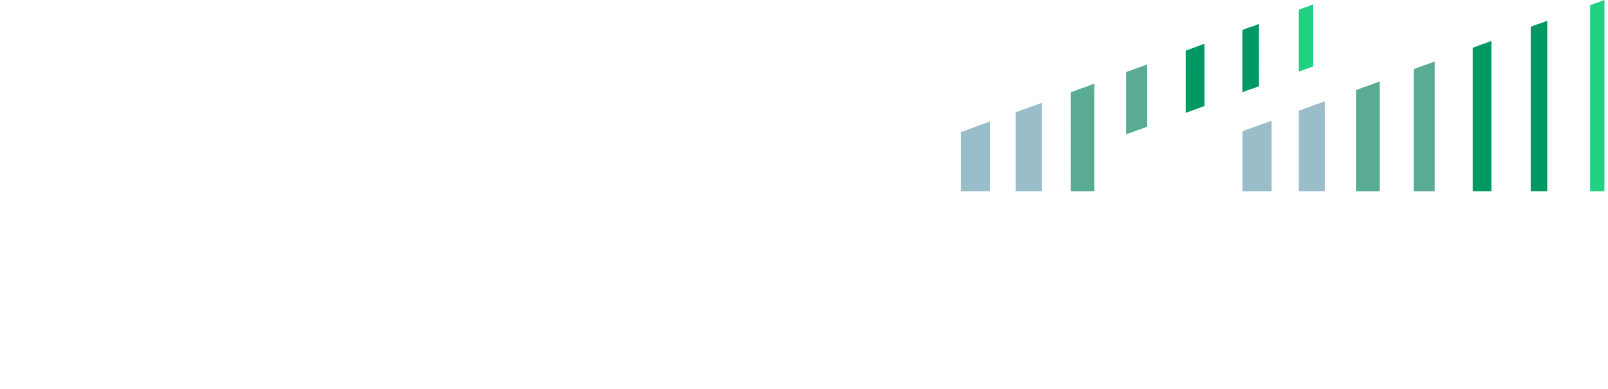 DigitalBridge Group Logo groß für dunkle Hintergründe (transparentes PNG)